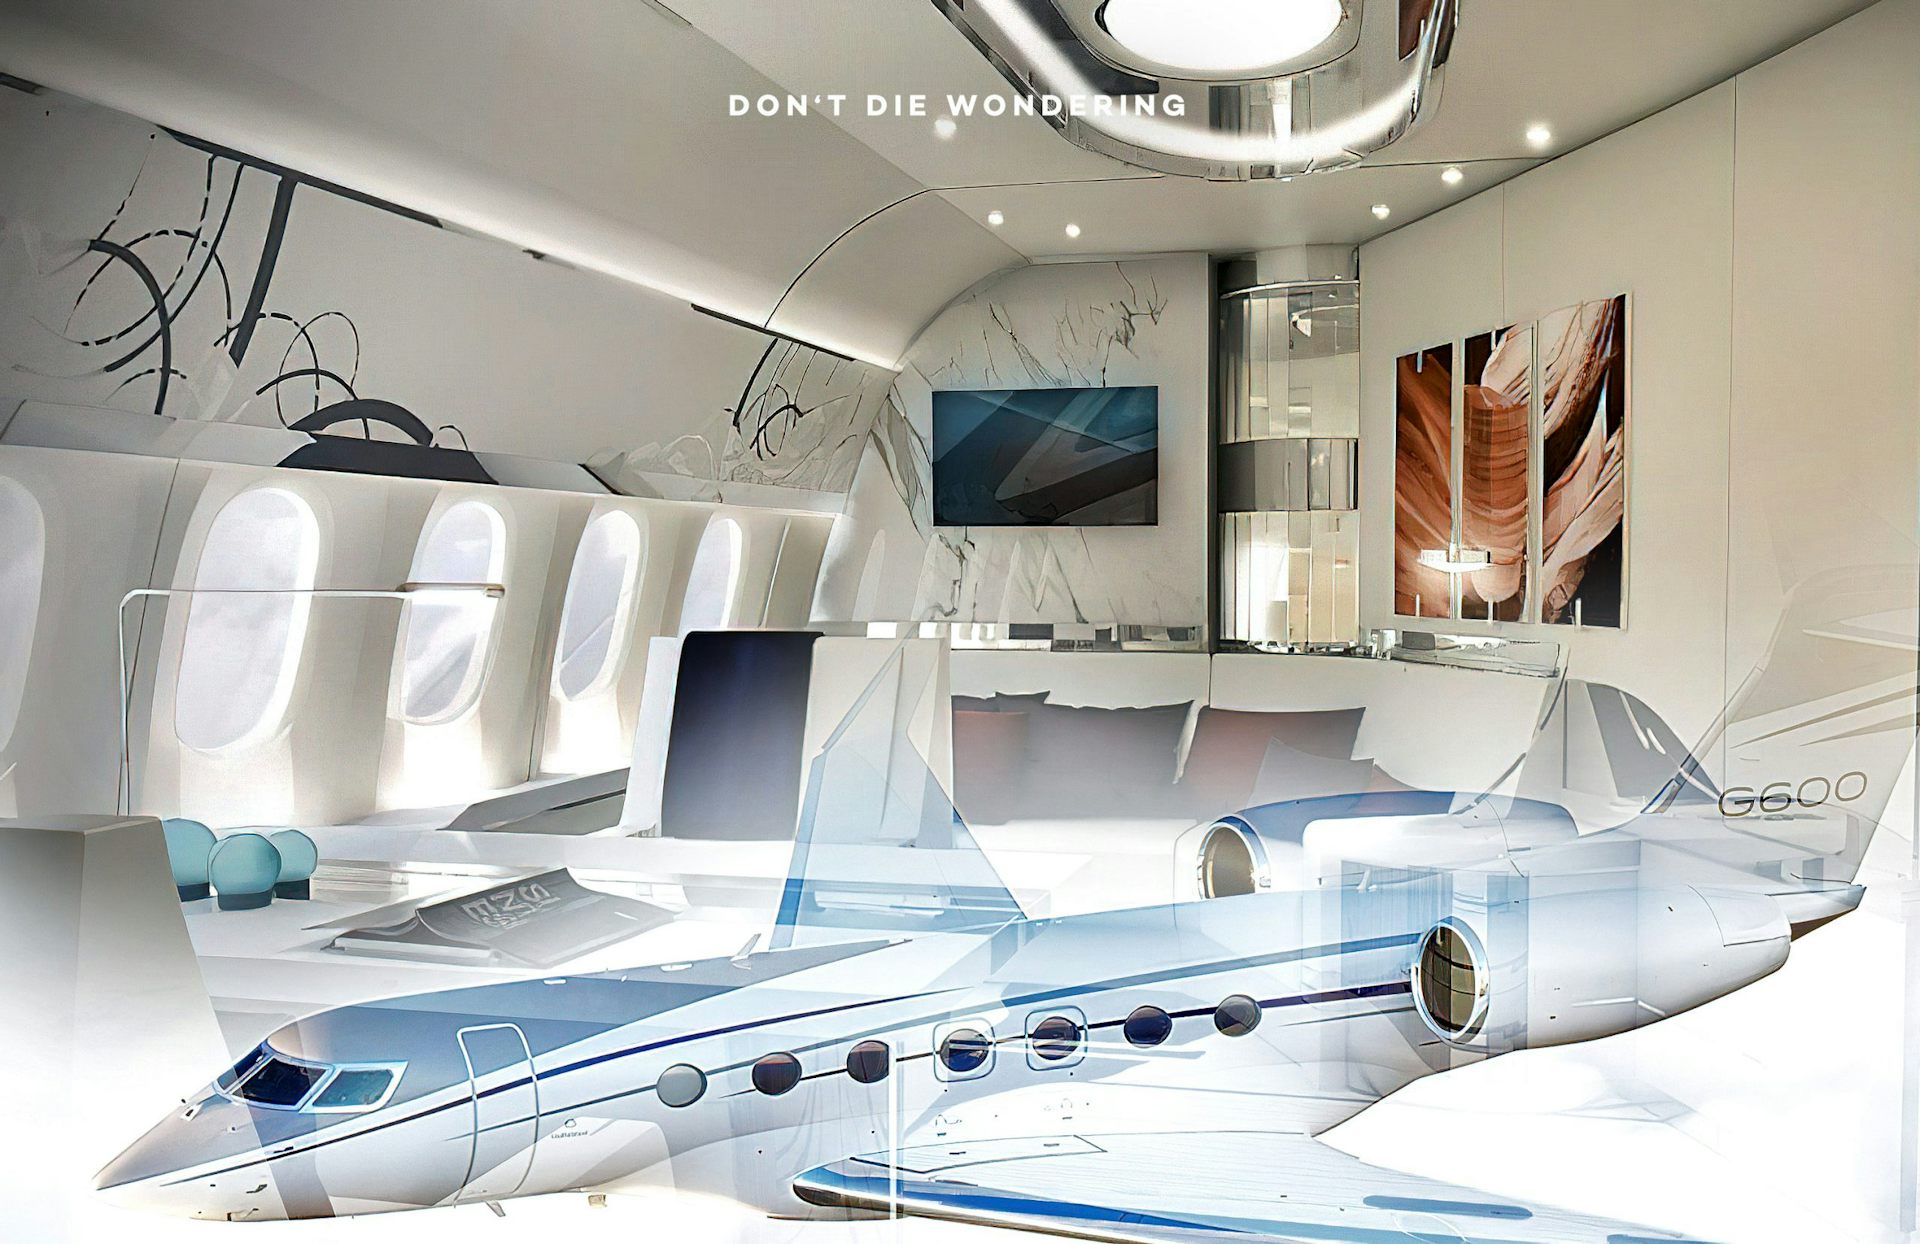 The Most Lavish Interior Design Ideas For Your Private Jet